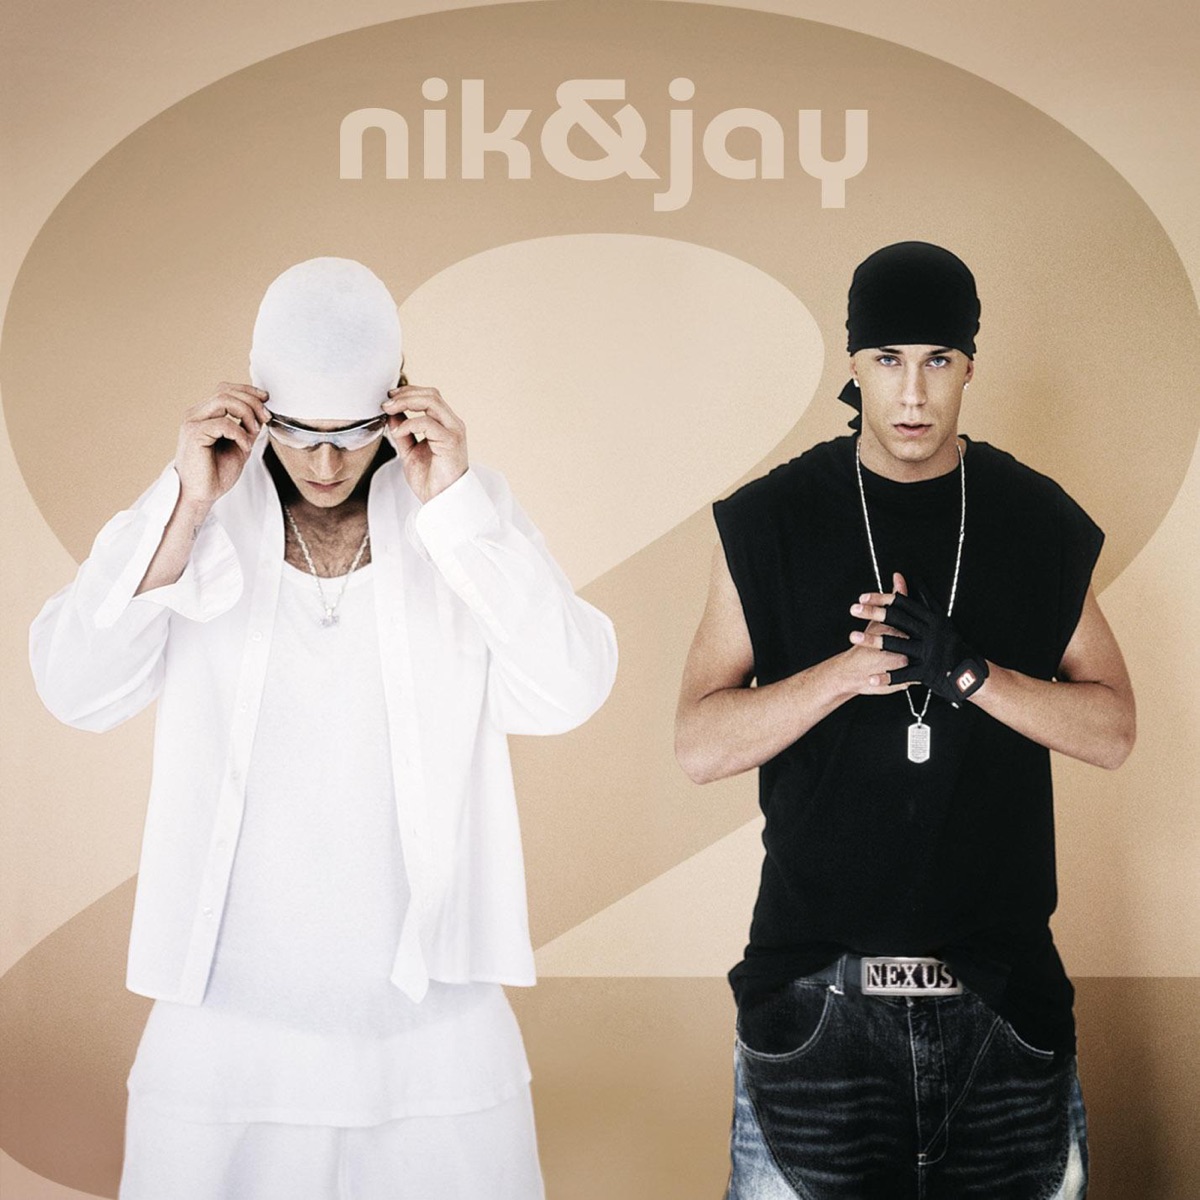 Nik & Jay 2 by Nik & Jay on Apple Music